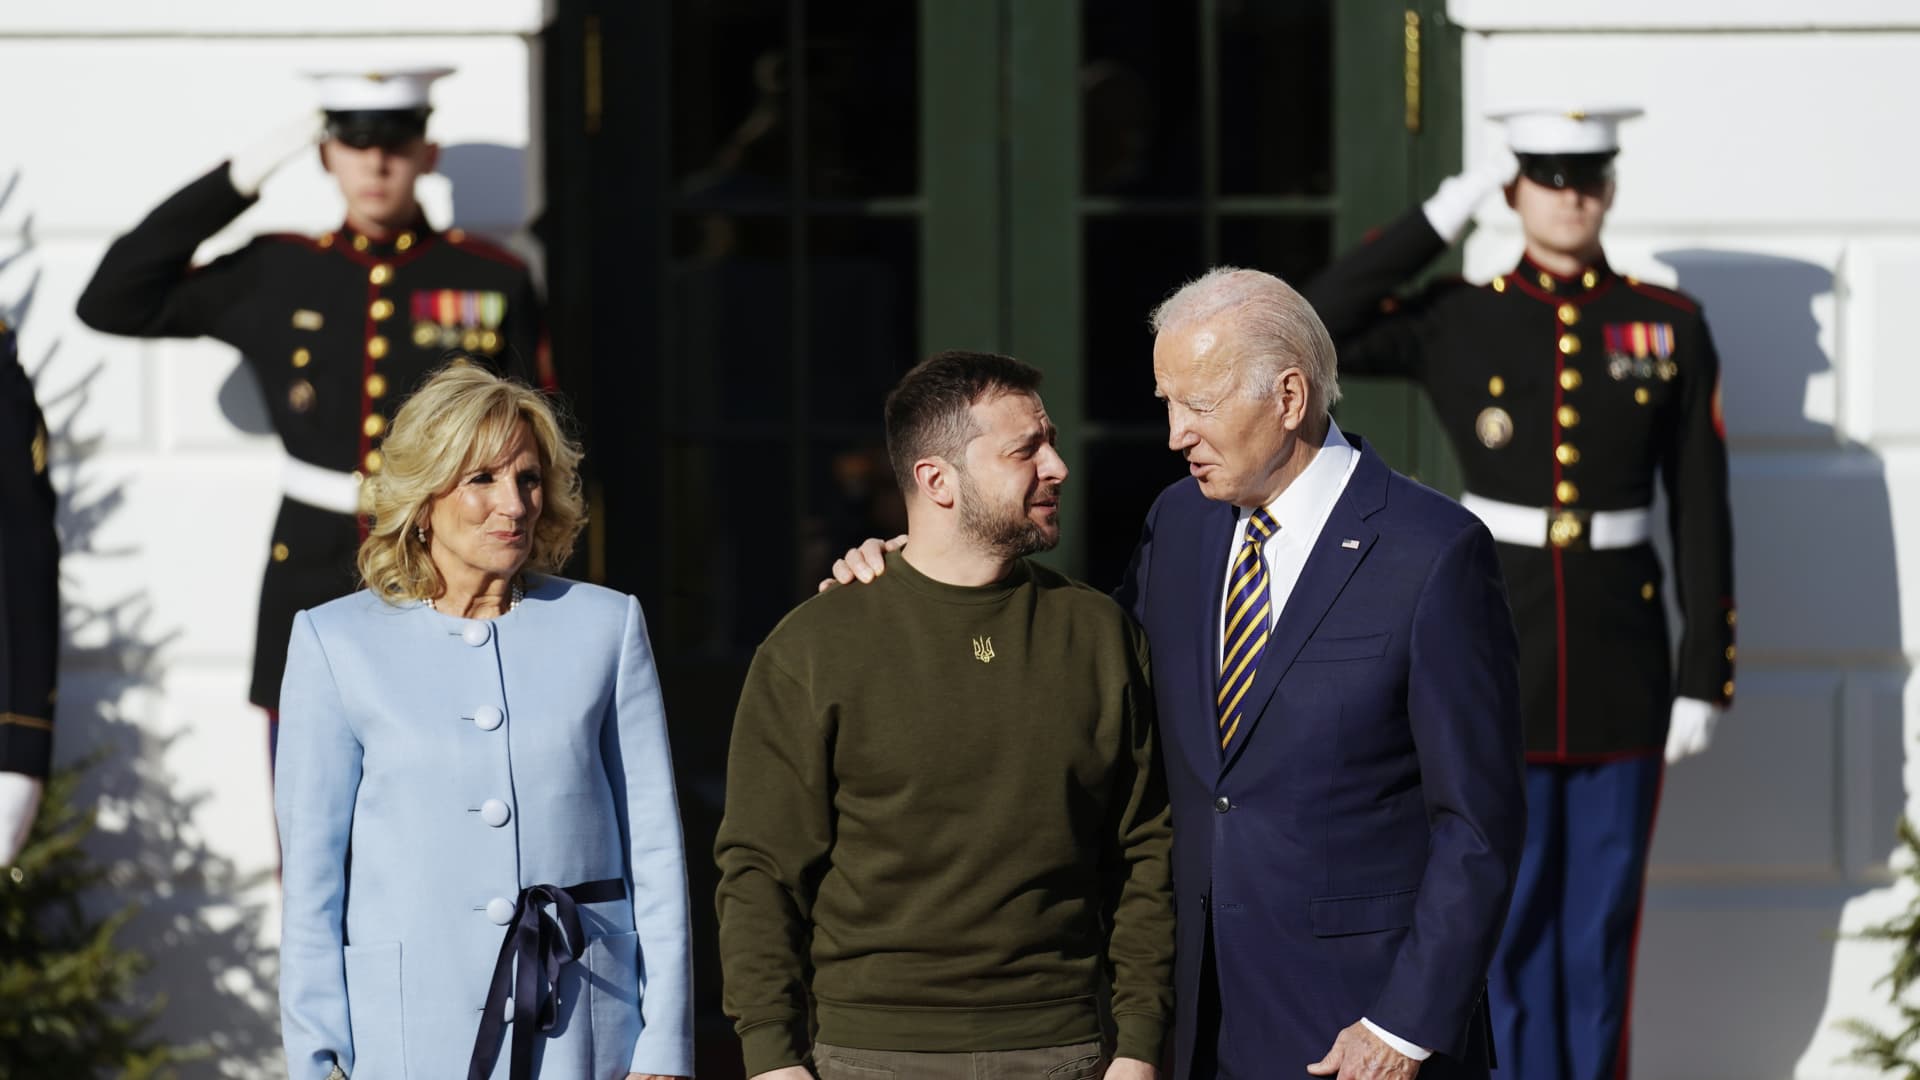 President Joe Biden welcomes Ukraine's President Volodymyr Zelenskyy at the White House in Washington, Wednesday, Dec. 21, 2022.